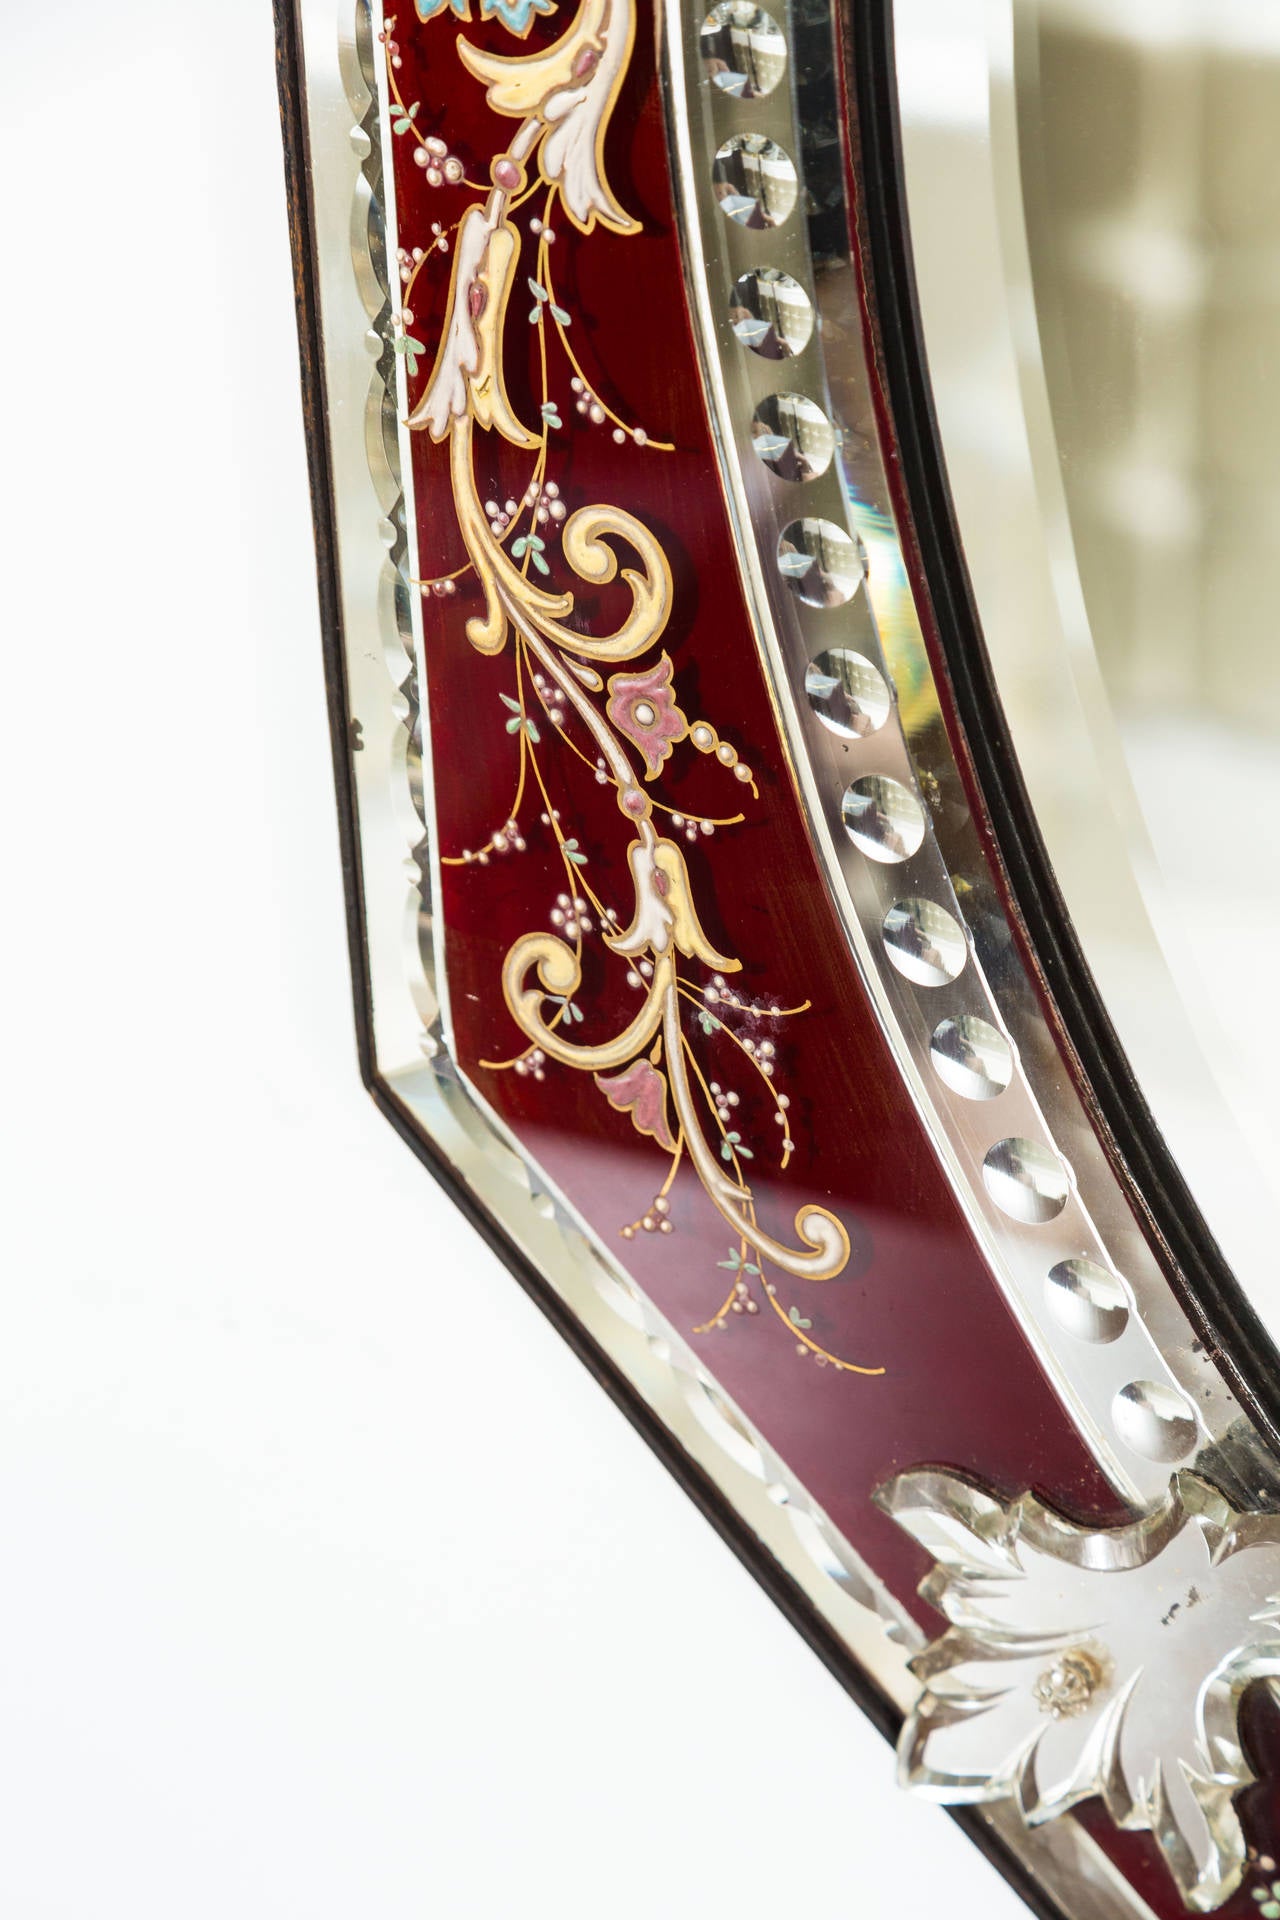 Appliqué Exquisite and Unique Venetian Mirror with Enameled Decoration